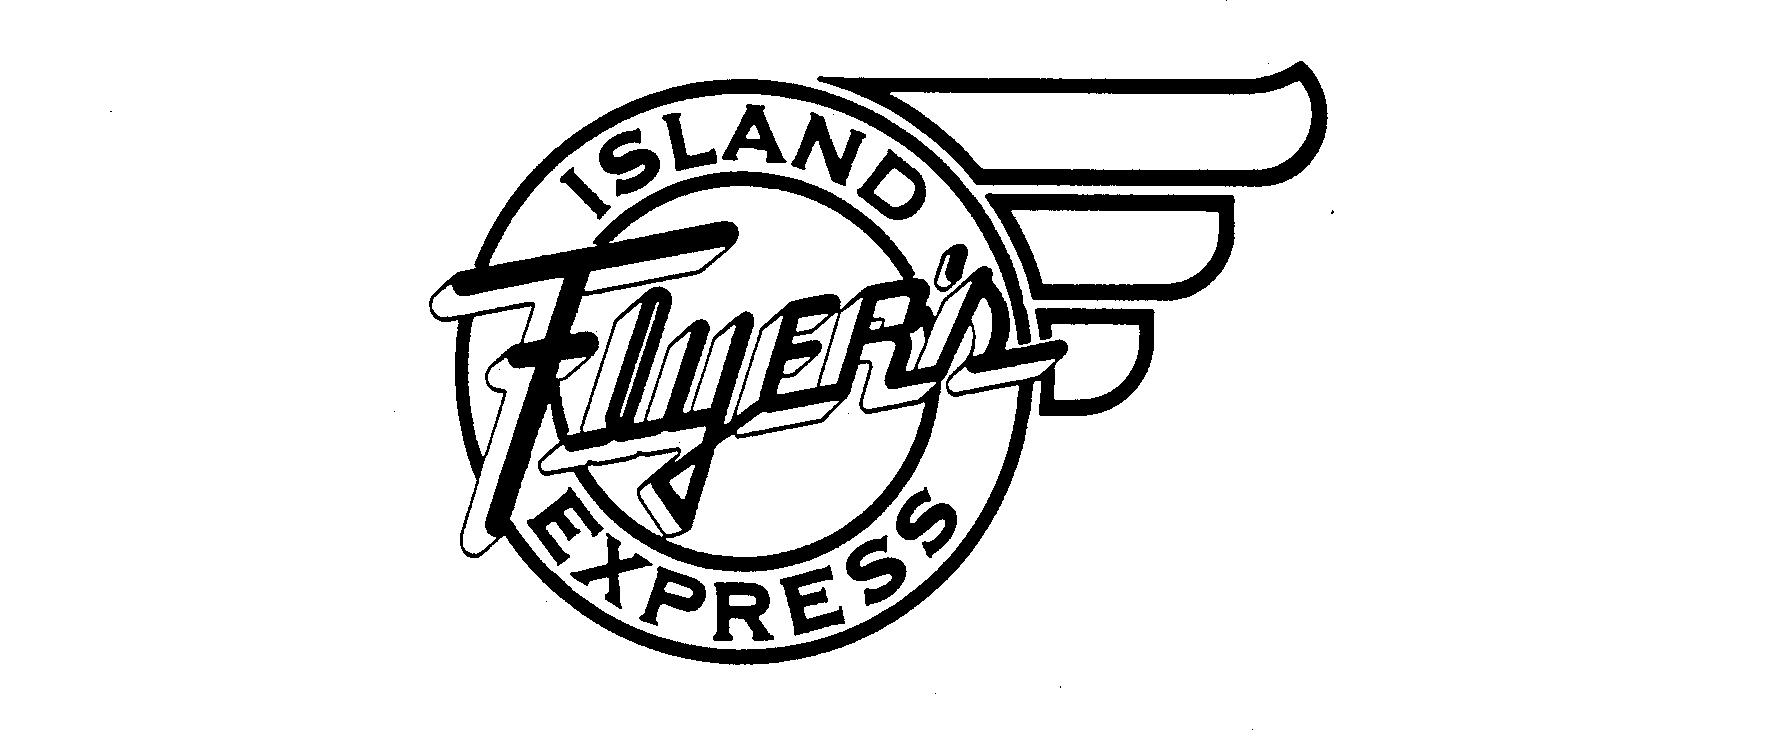  FLYER'S ISLAND EXPRESS